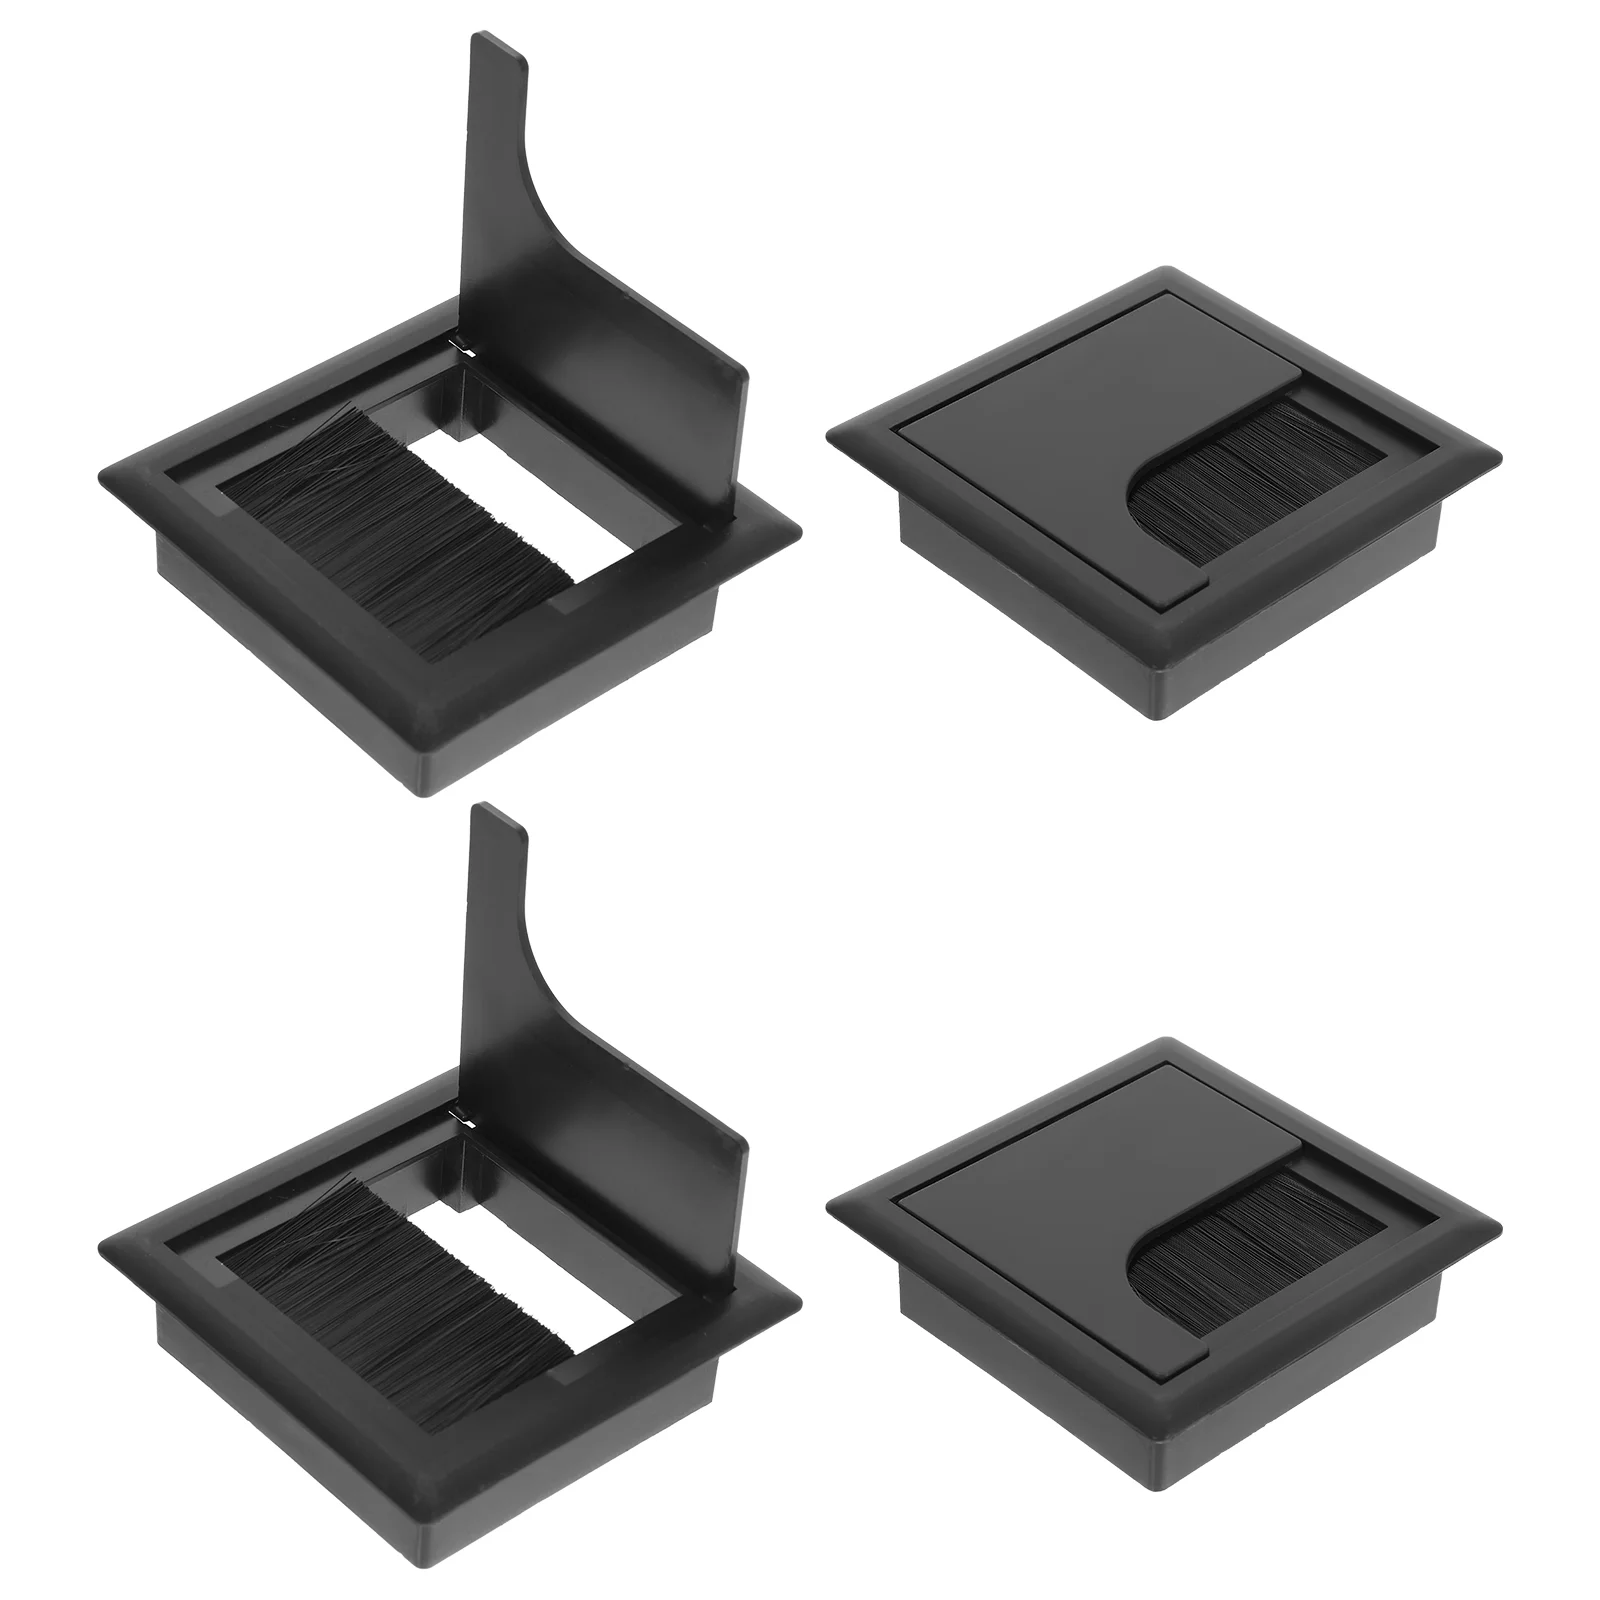 

4pcs Desk Wire Cord Cable Grommets Hole Cover for Office PC Desk Cable Desk Grommet Covers